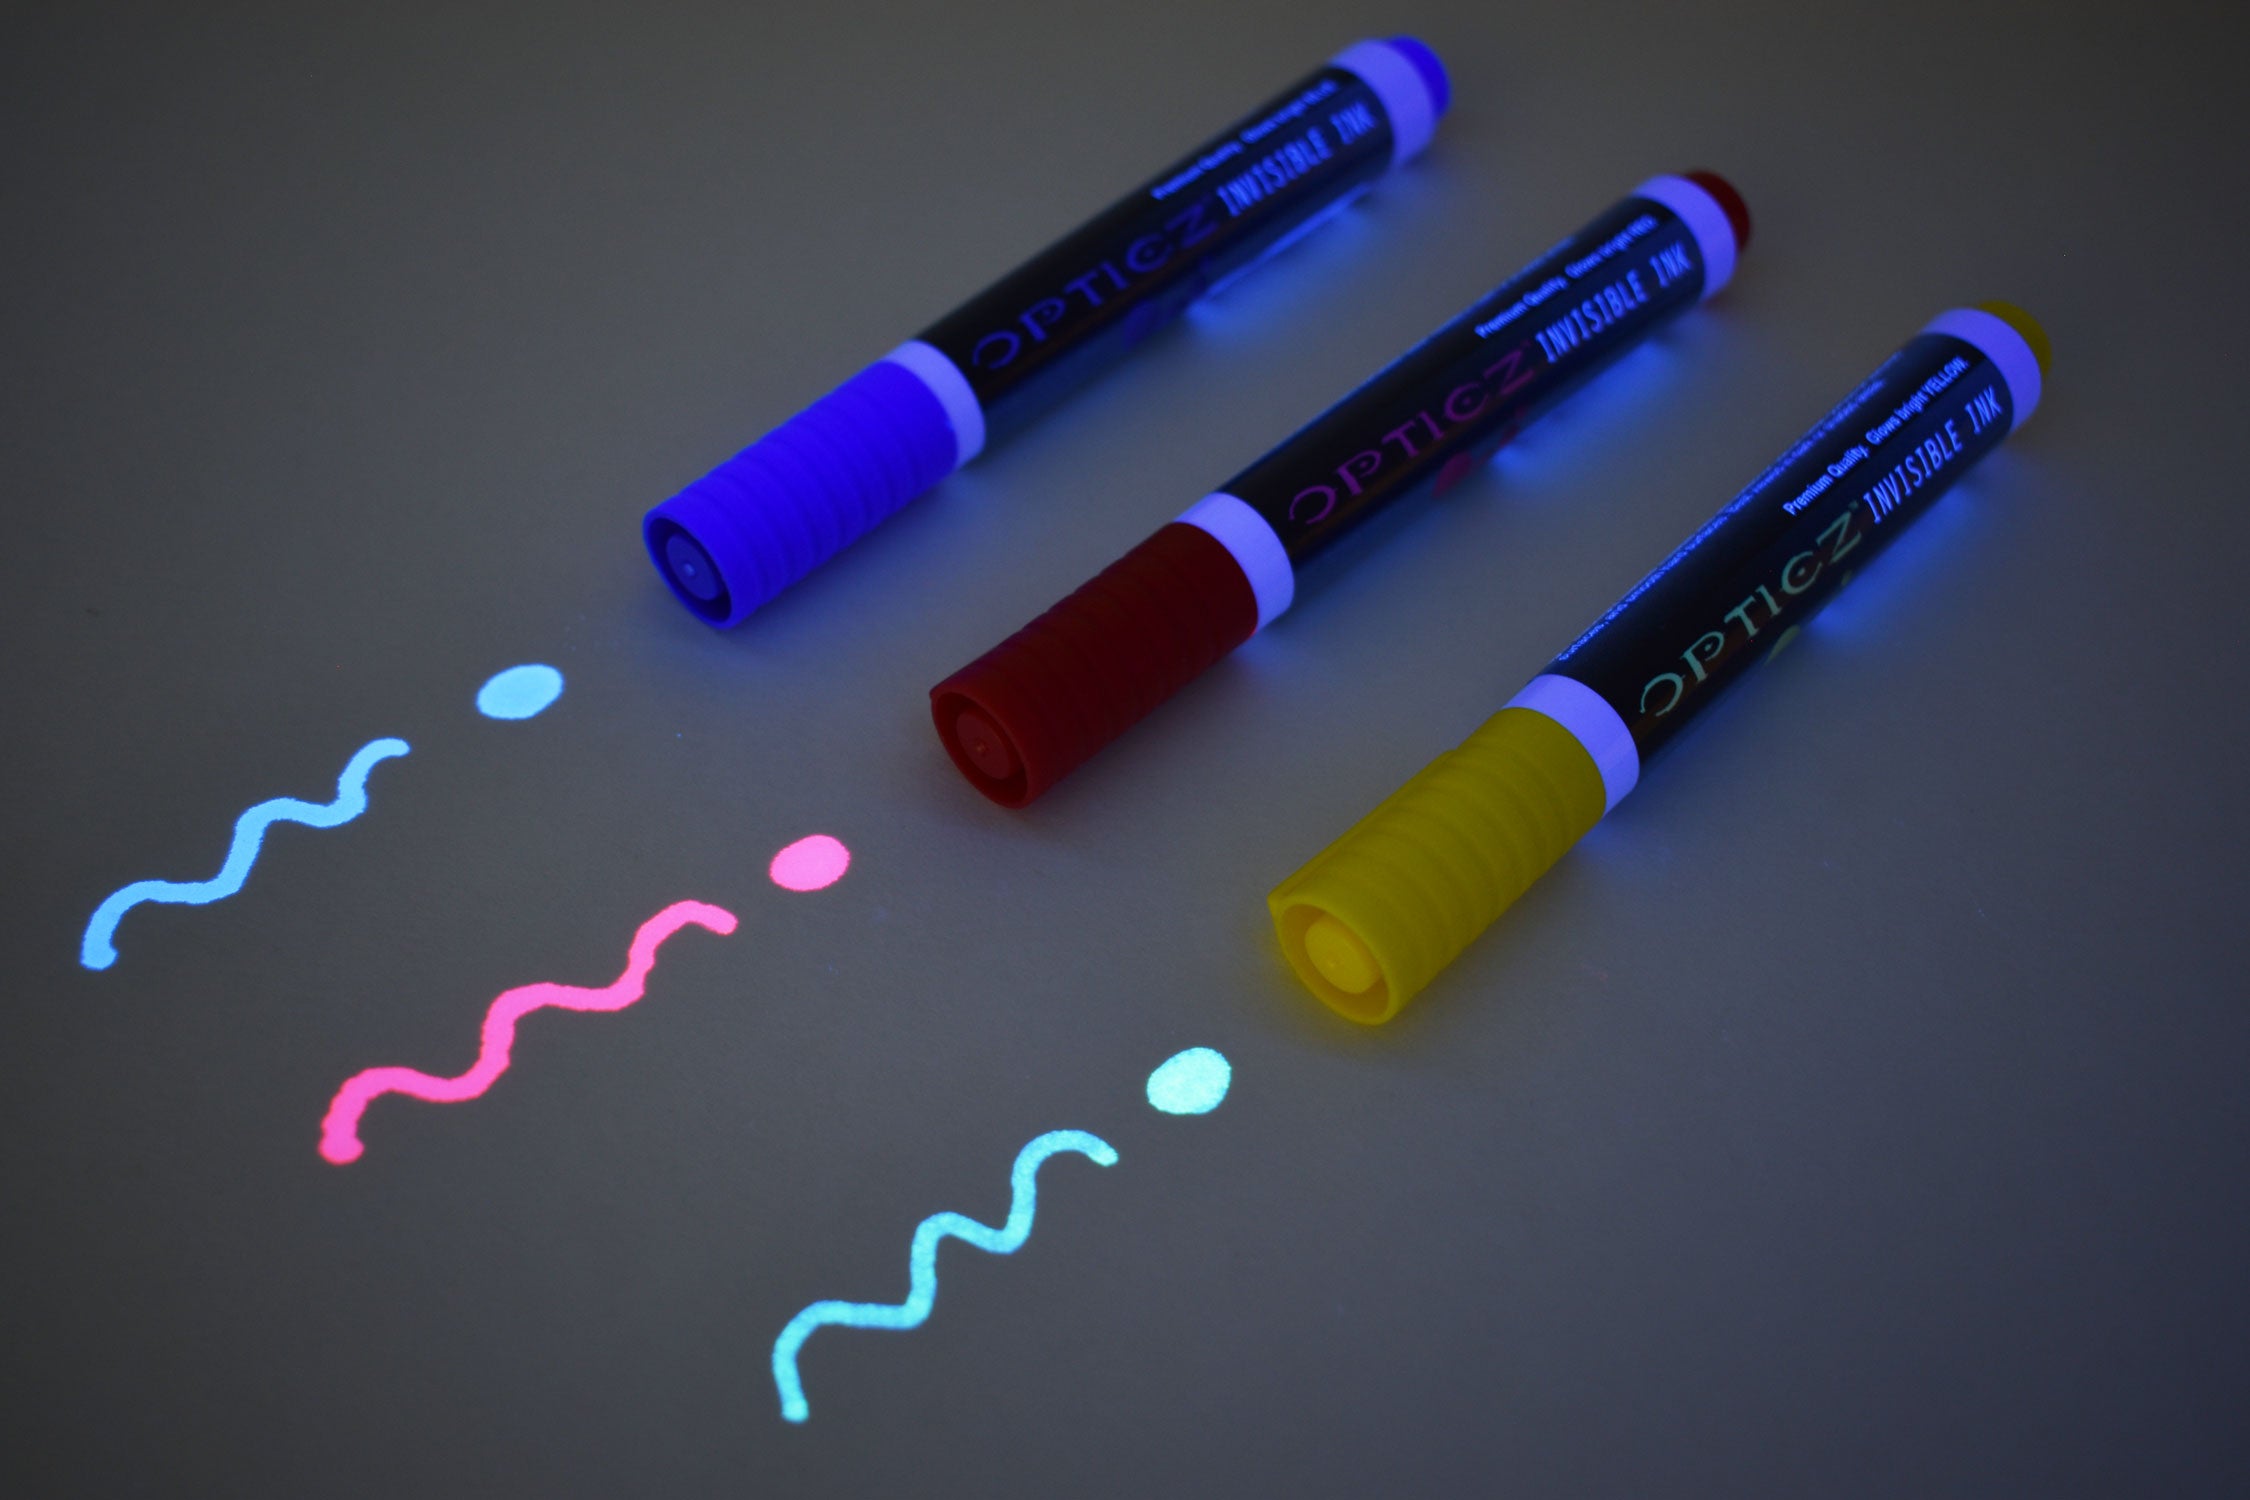 4 Ounce Set Glow in the Dark Luminous Fluorescent Fabric Paint for Fabrics  & Art with DIRECTGLOW Keychain UV Light